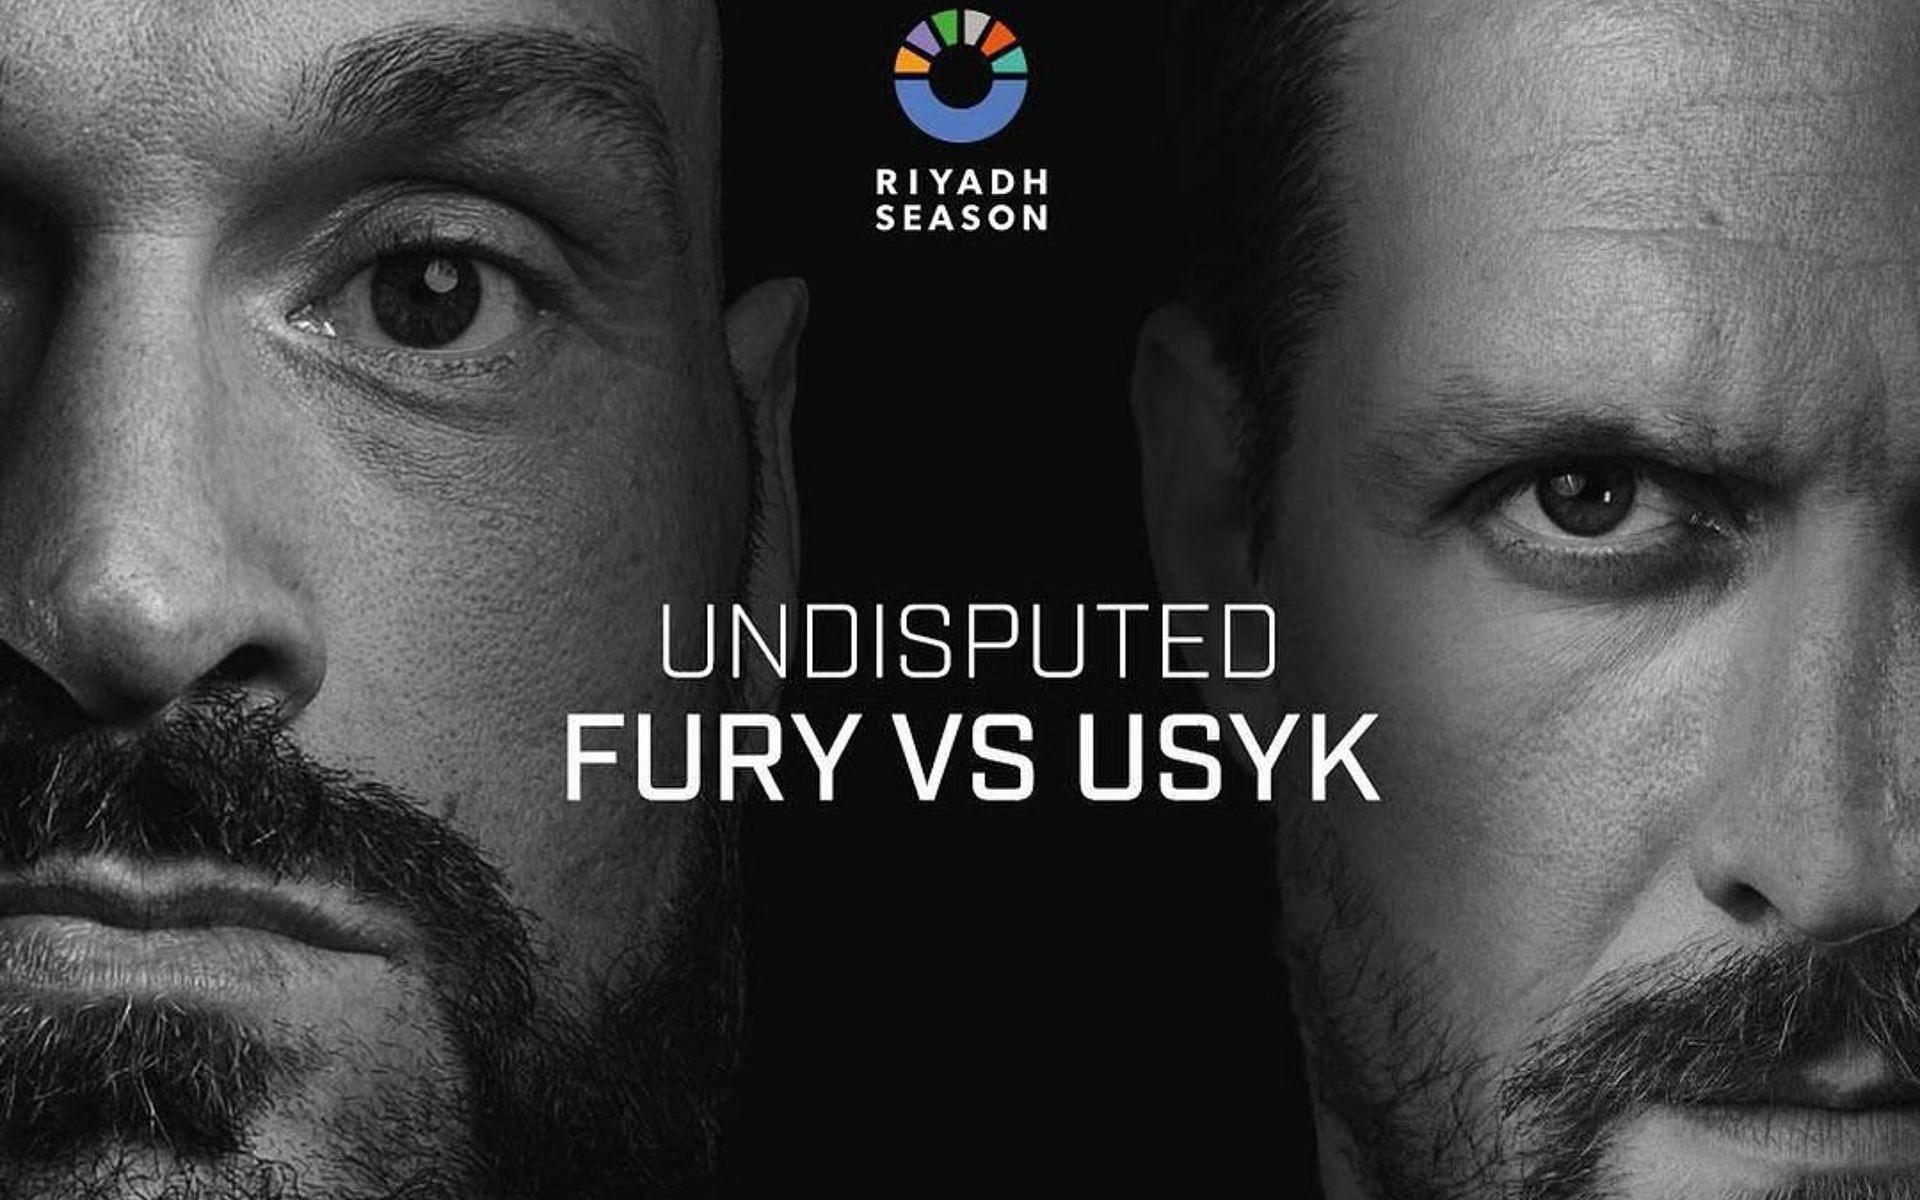 Tyson Fury vs. Oleksandr usyk event adds another heavyweight clash